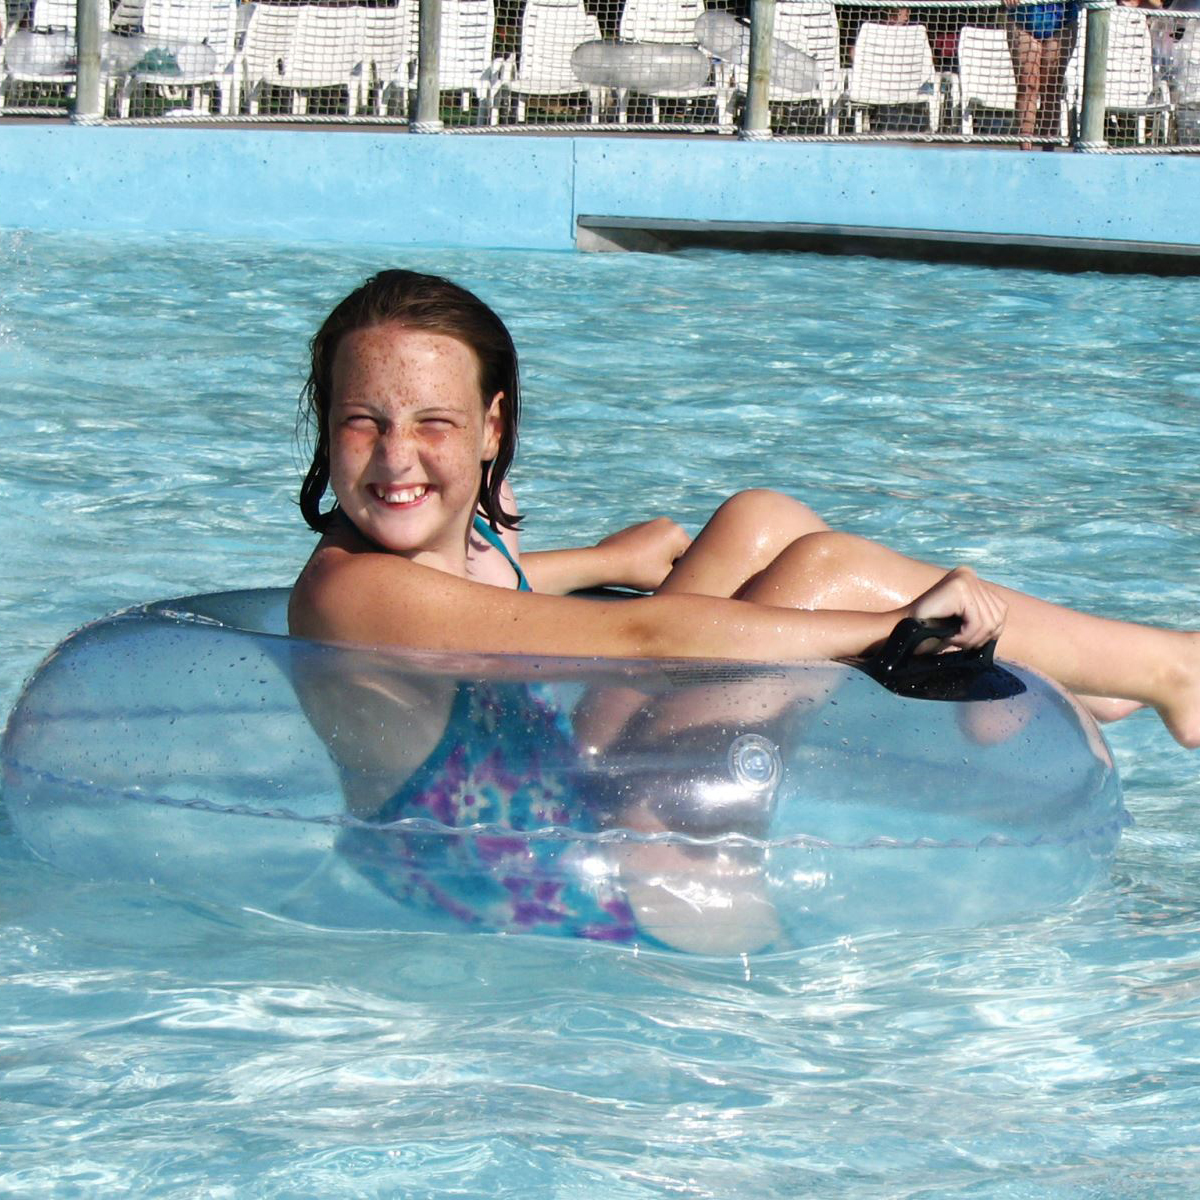 girl on pool float in water